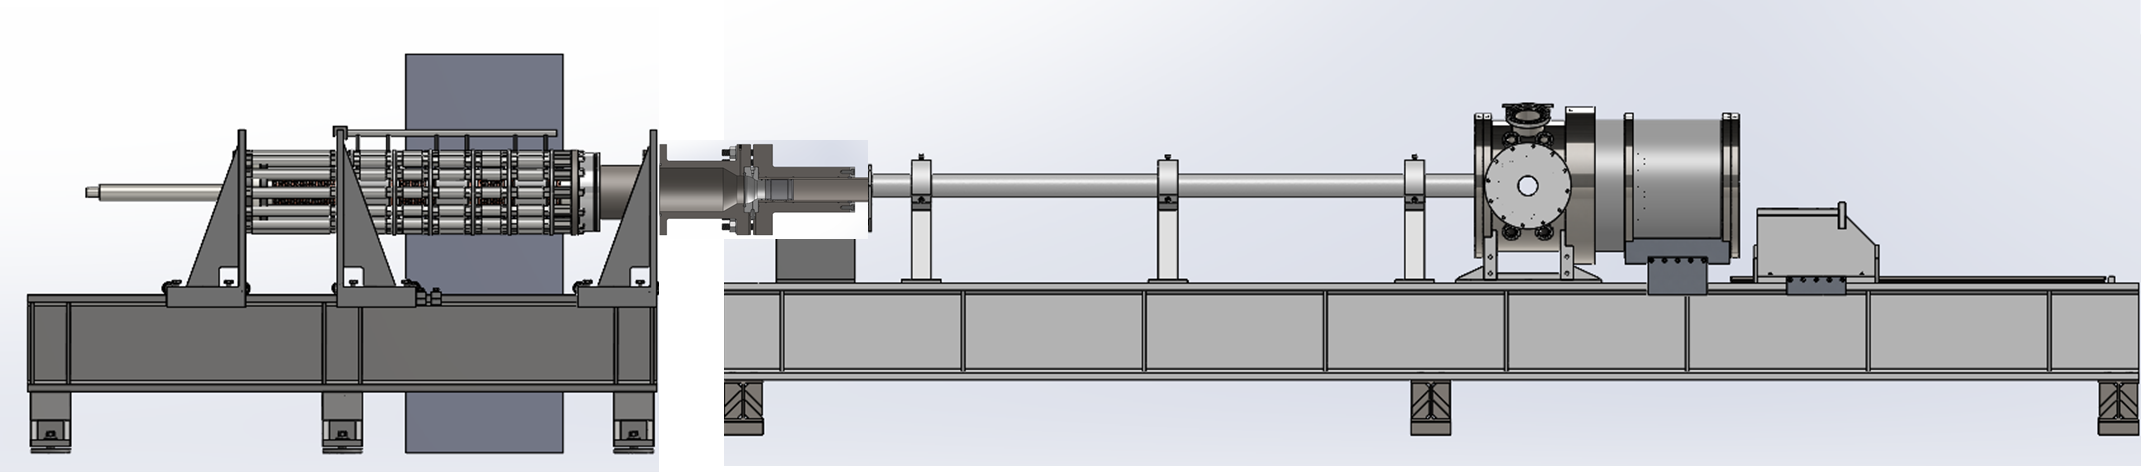 Figure 1. Conceptual design of C3 Launcher with HEML